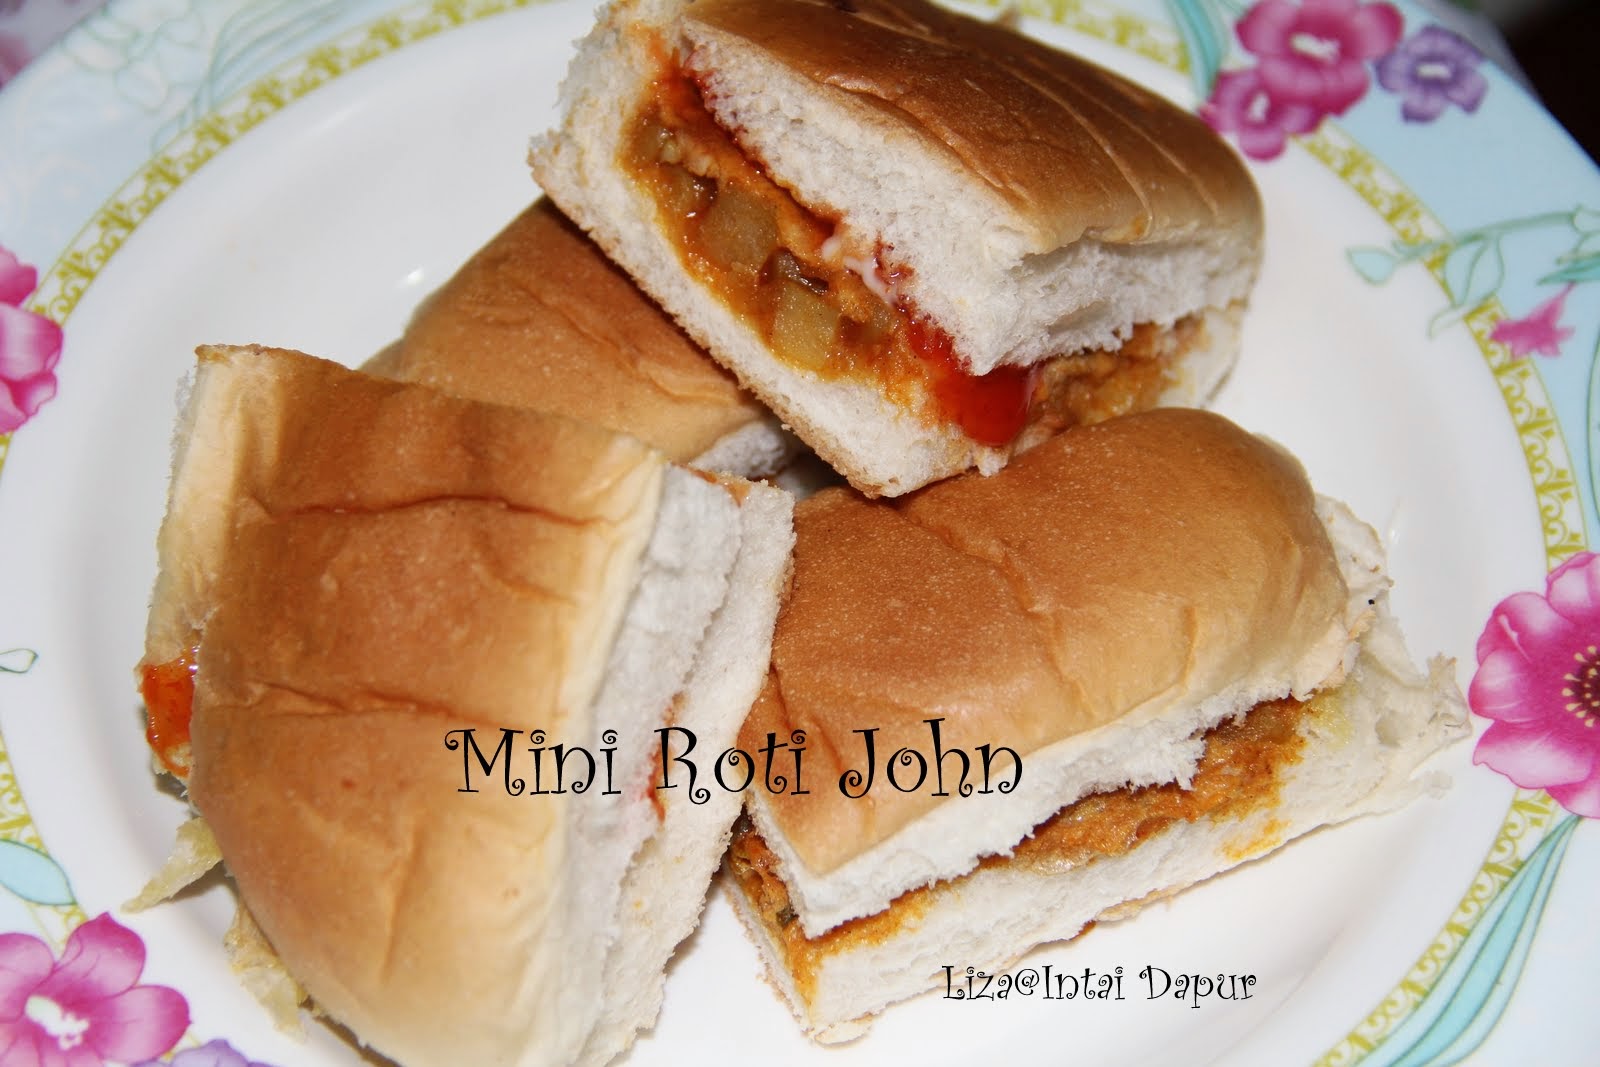 INTAI DAPUR: Mini Roti John